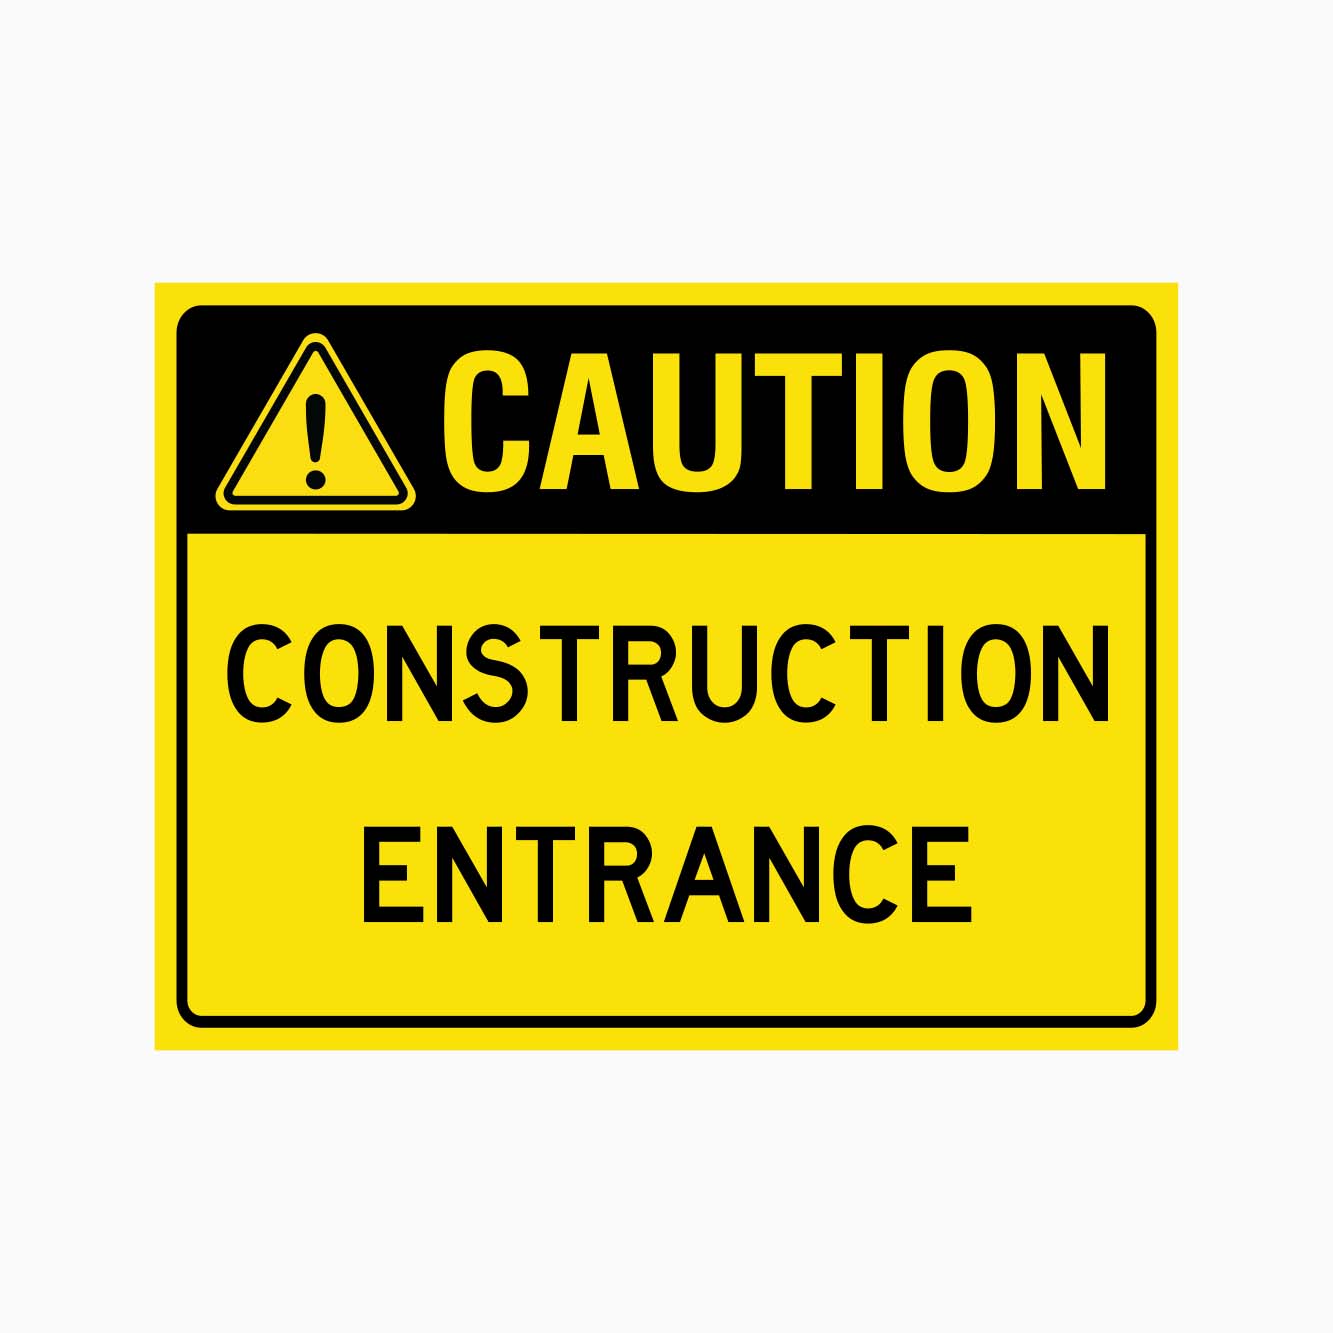 CAUTION CONSTRUCTION ENTRANCE SIGN - GET SIGNS